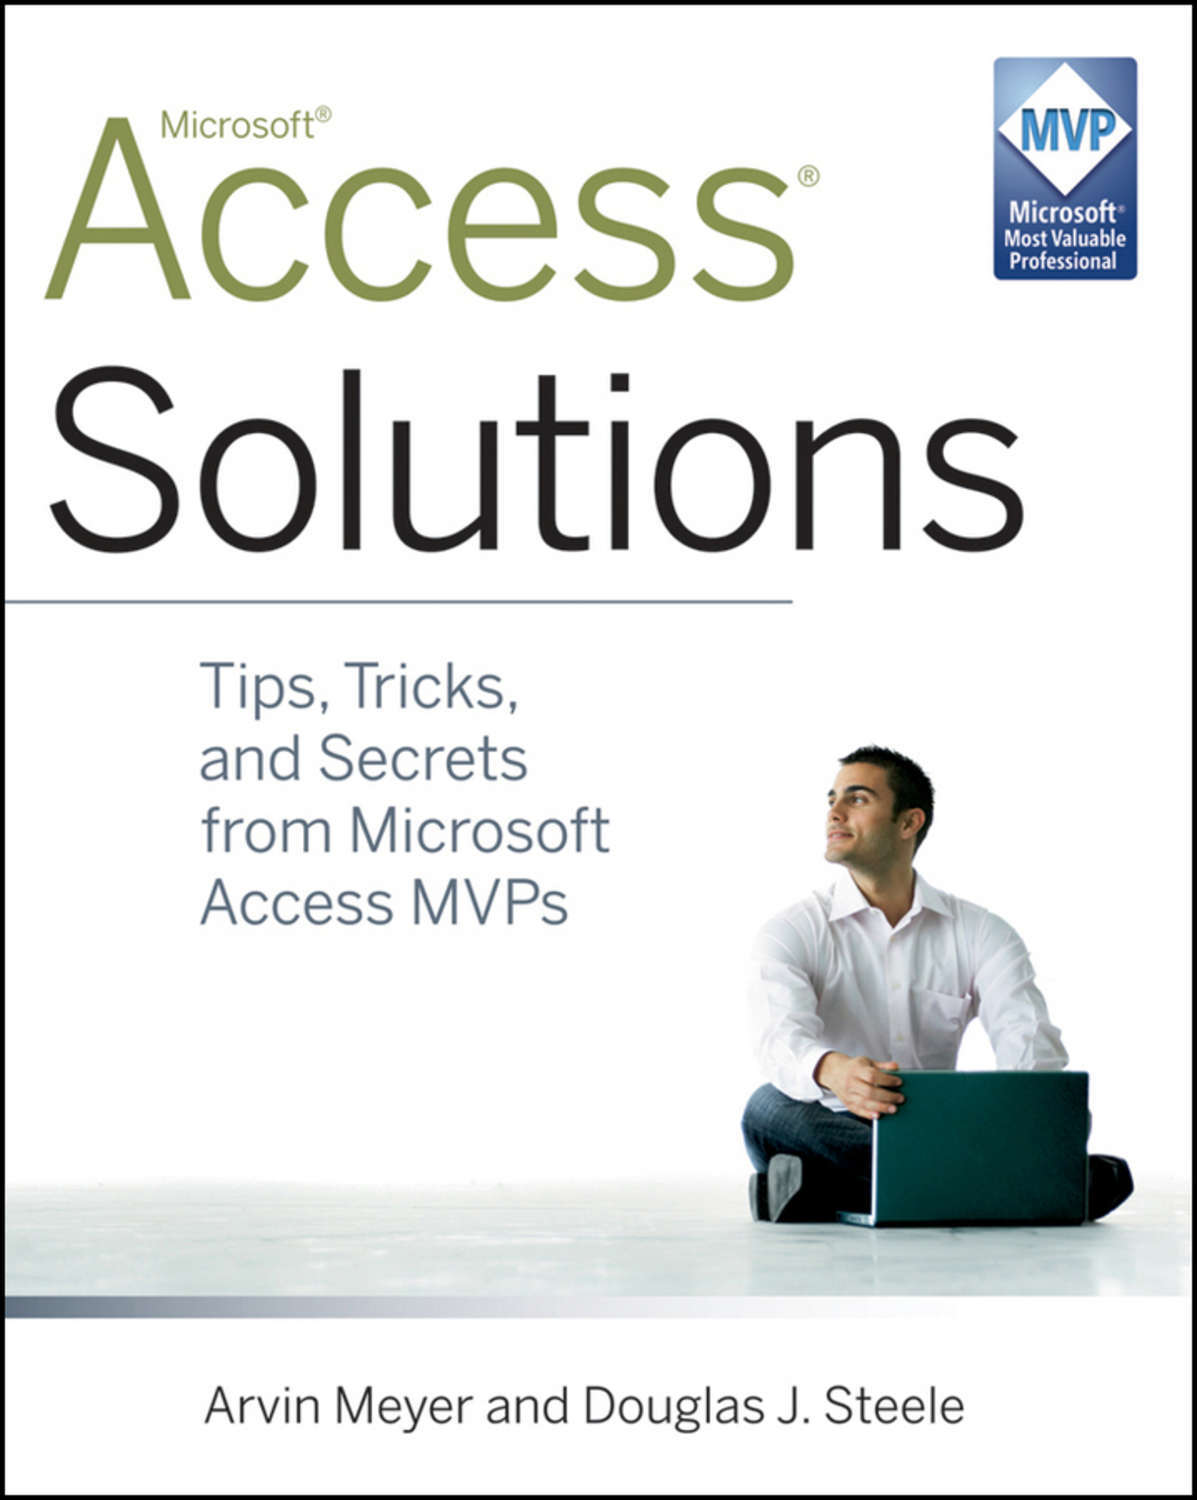 Book access. Книги access. Access solutions. Книги по access 2010. Книги по access 2010 Библия.